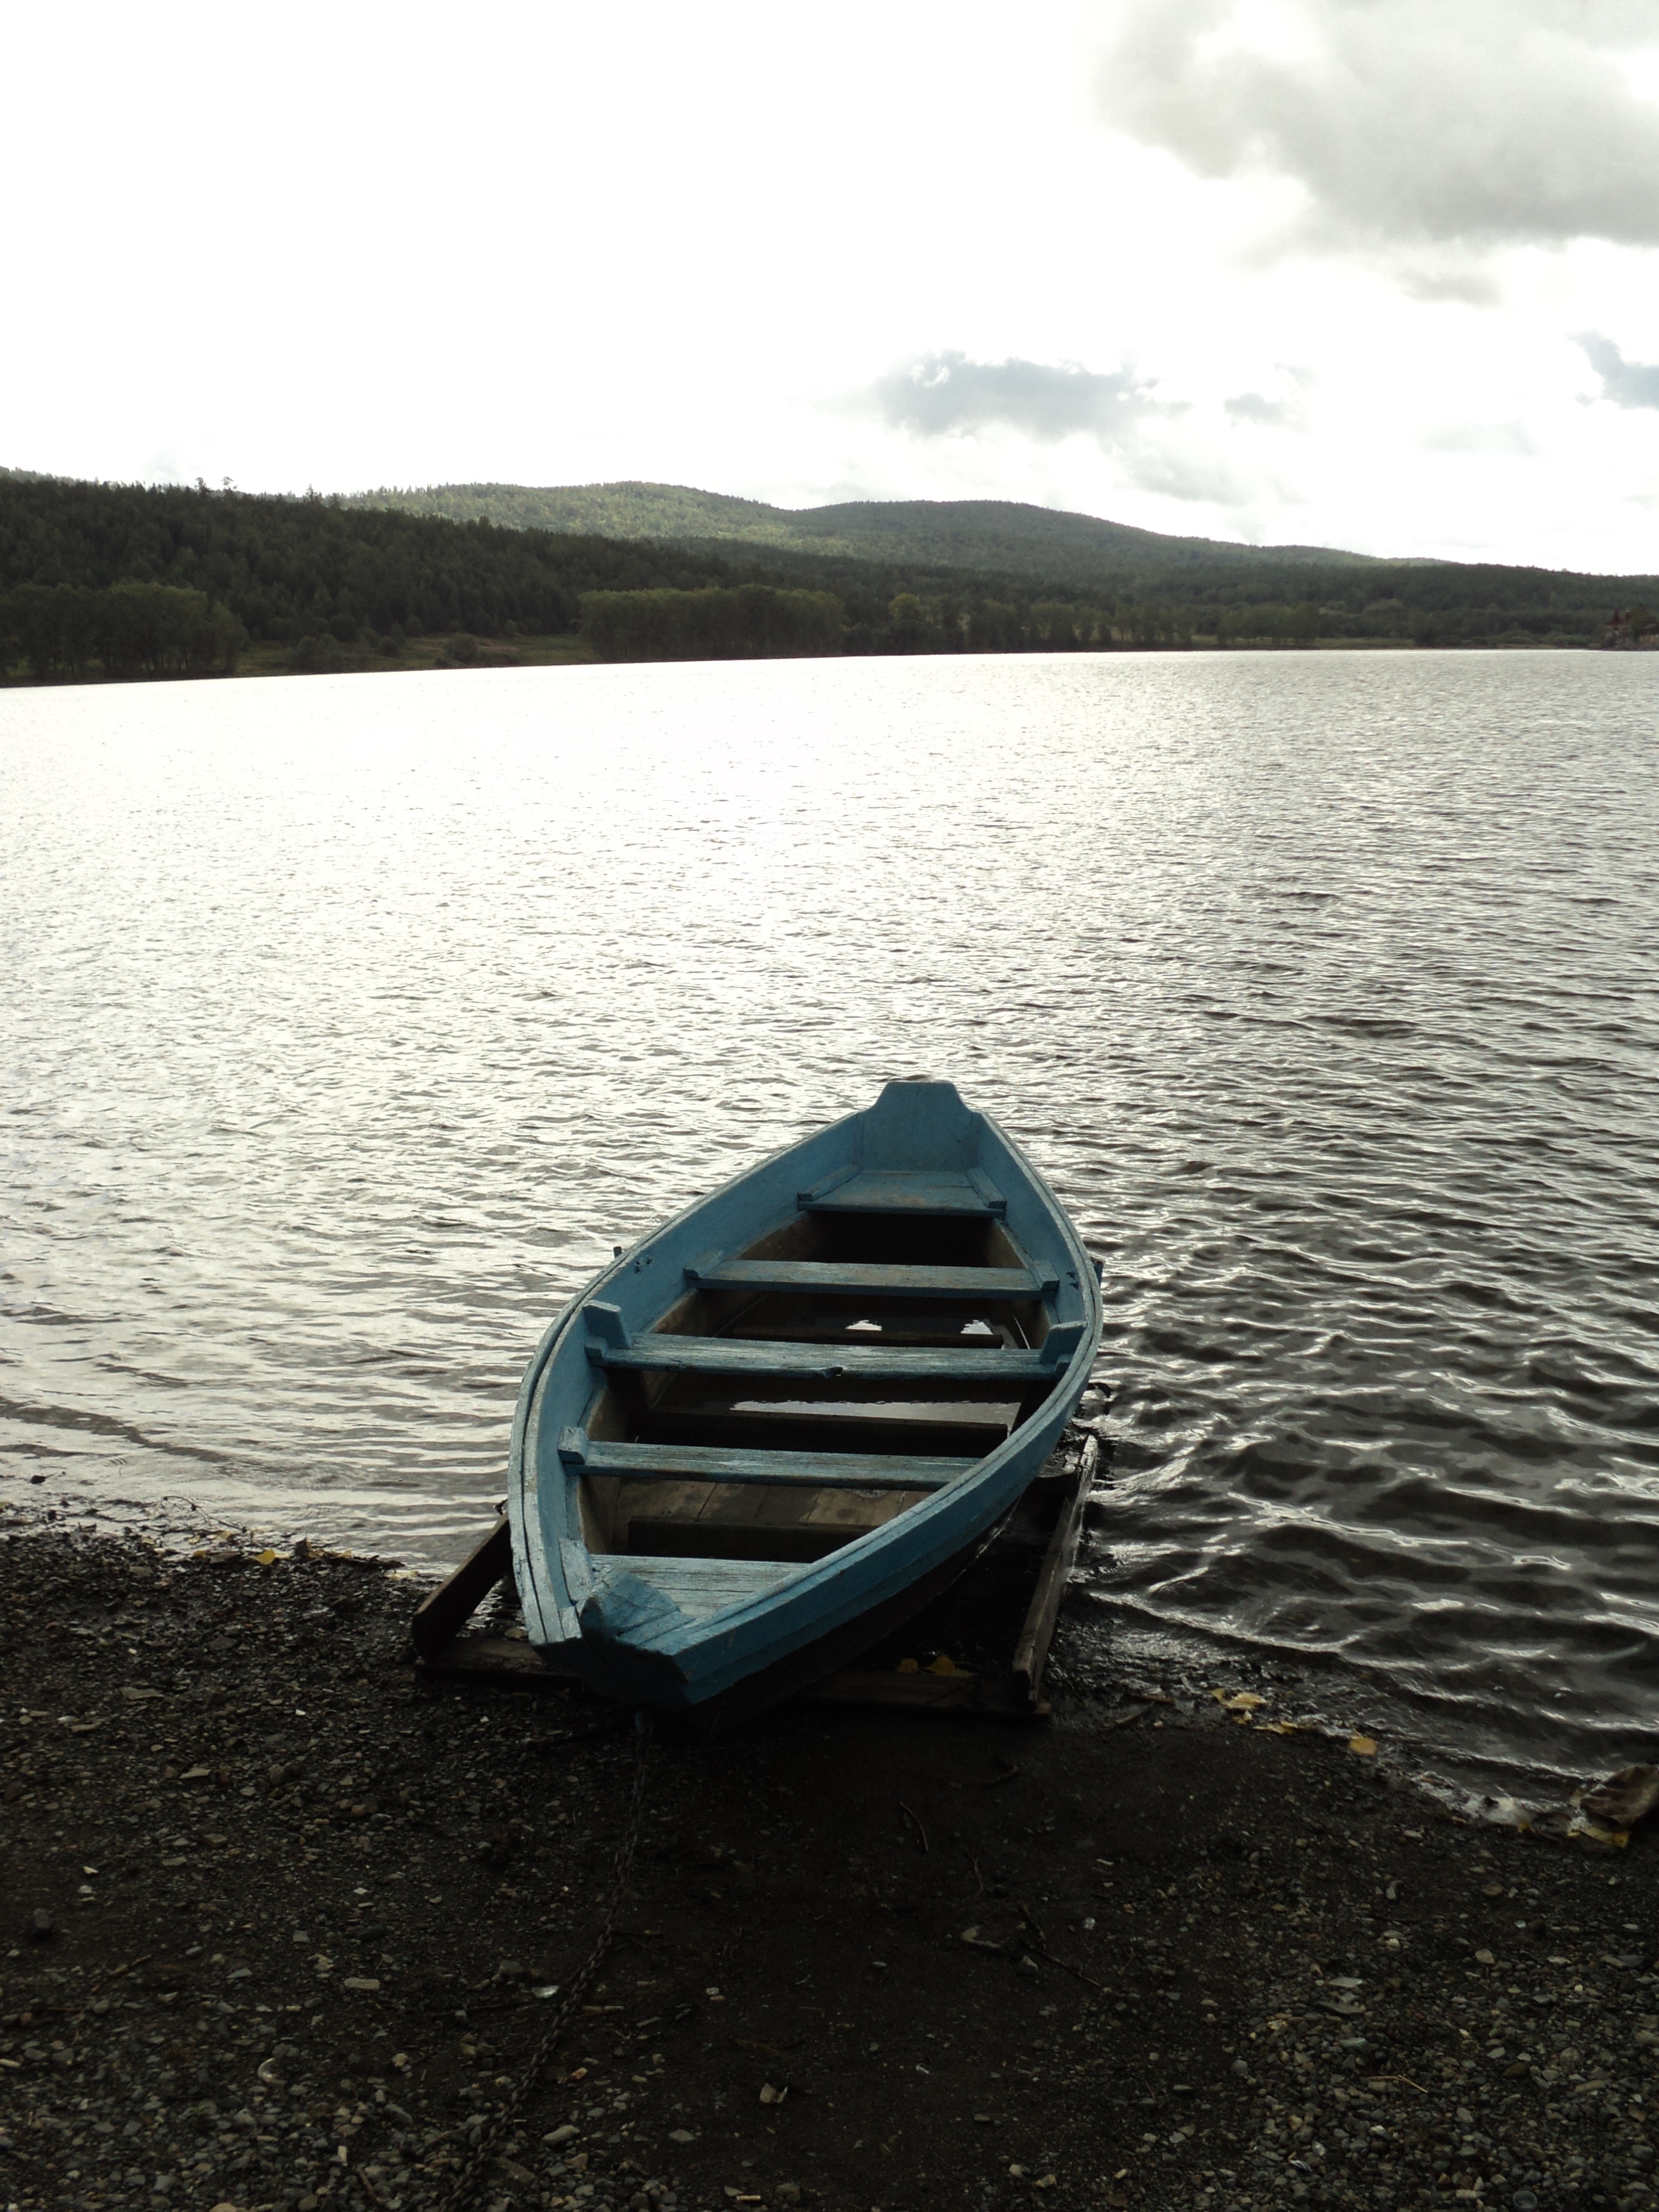 Waiting, Alone, Boat, Lake, Old, HQ Photo